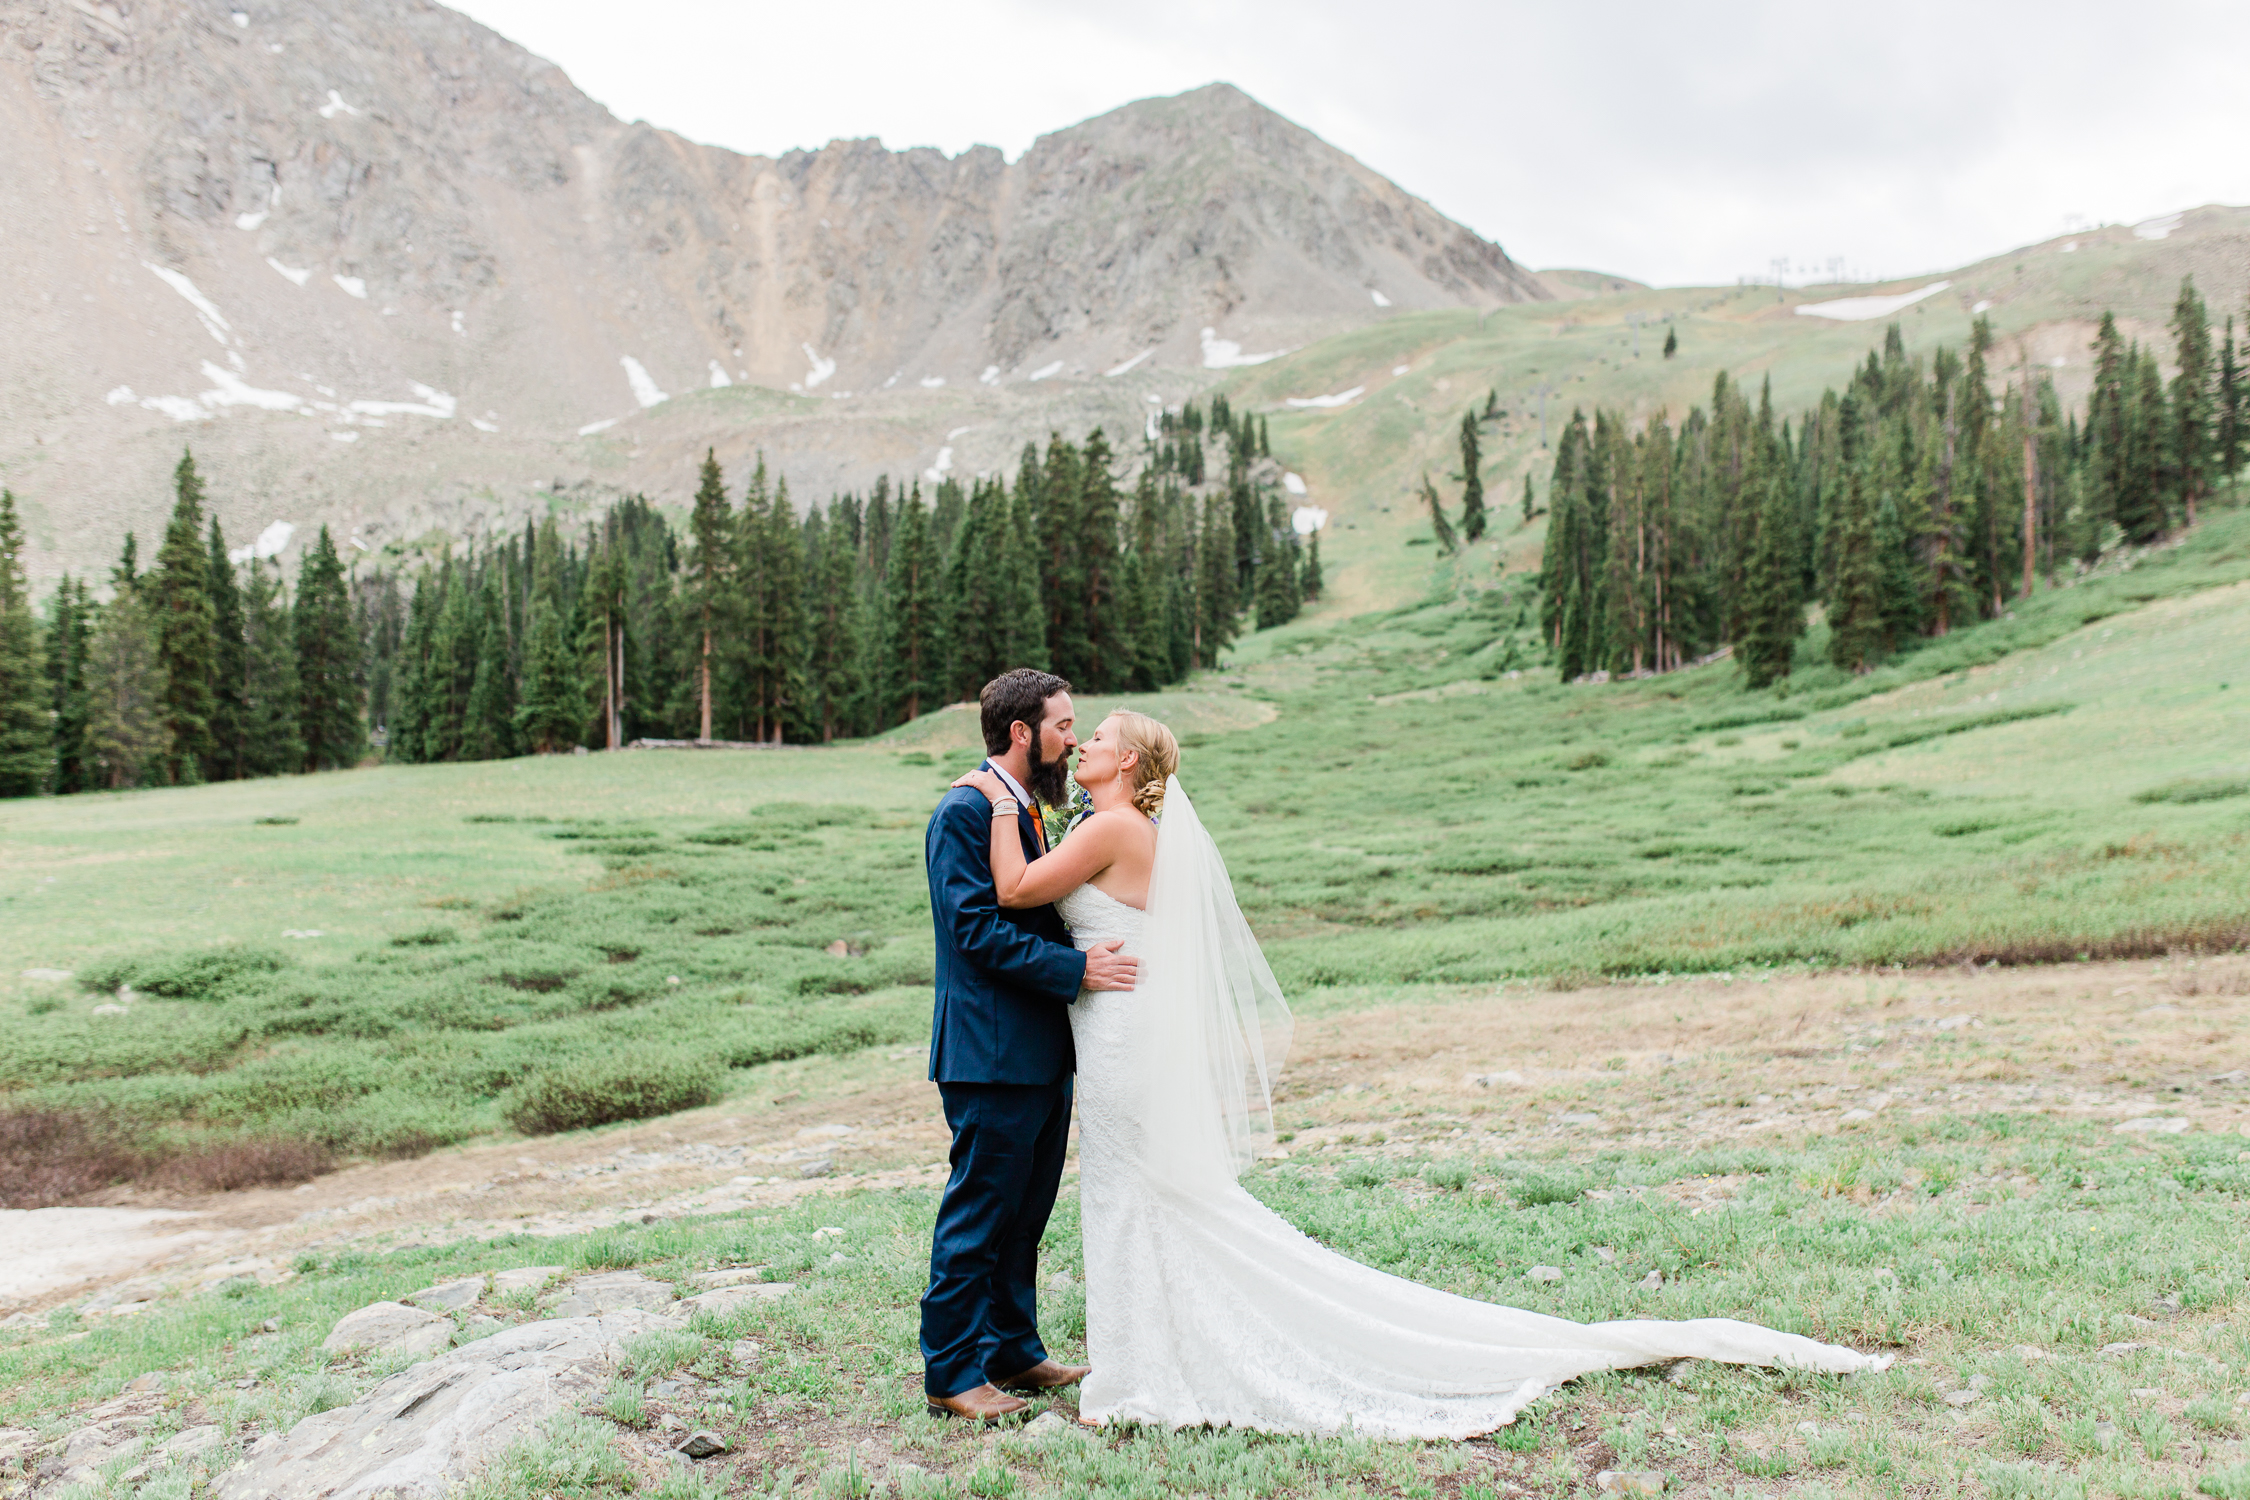 Arapahoe Basin Wedding at Black Mountain Lodge, Colorado - Ashleigh Miller Wedding Photography